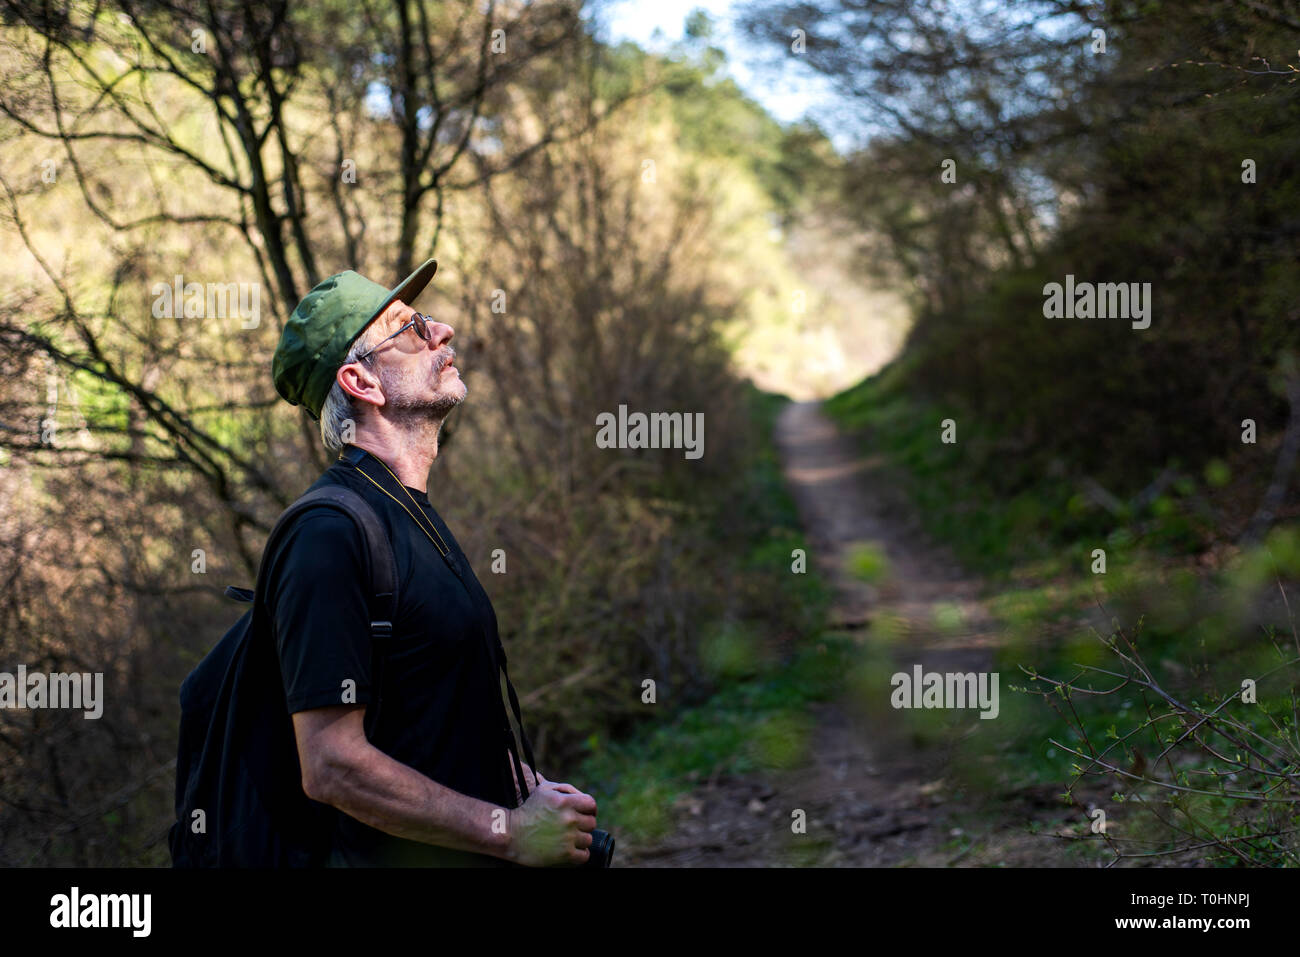 Senior man enjoying nature on a hiking trip Stock Photo